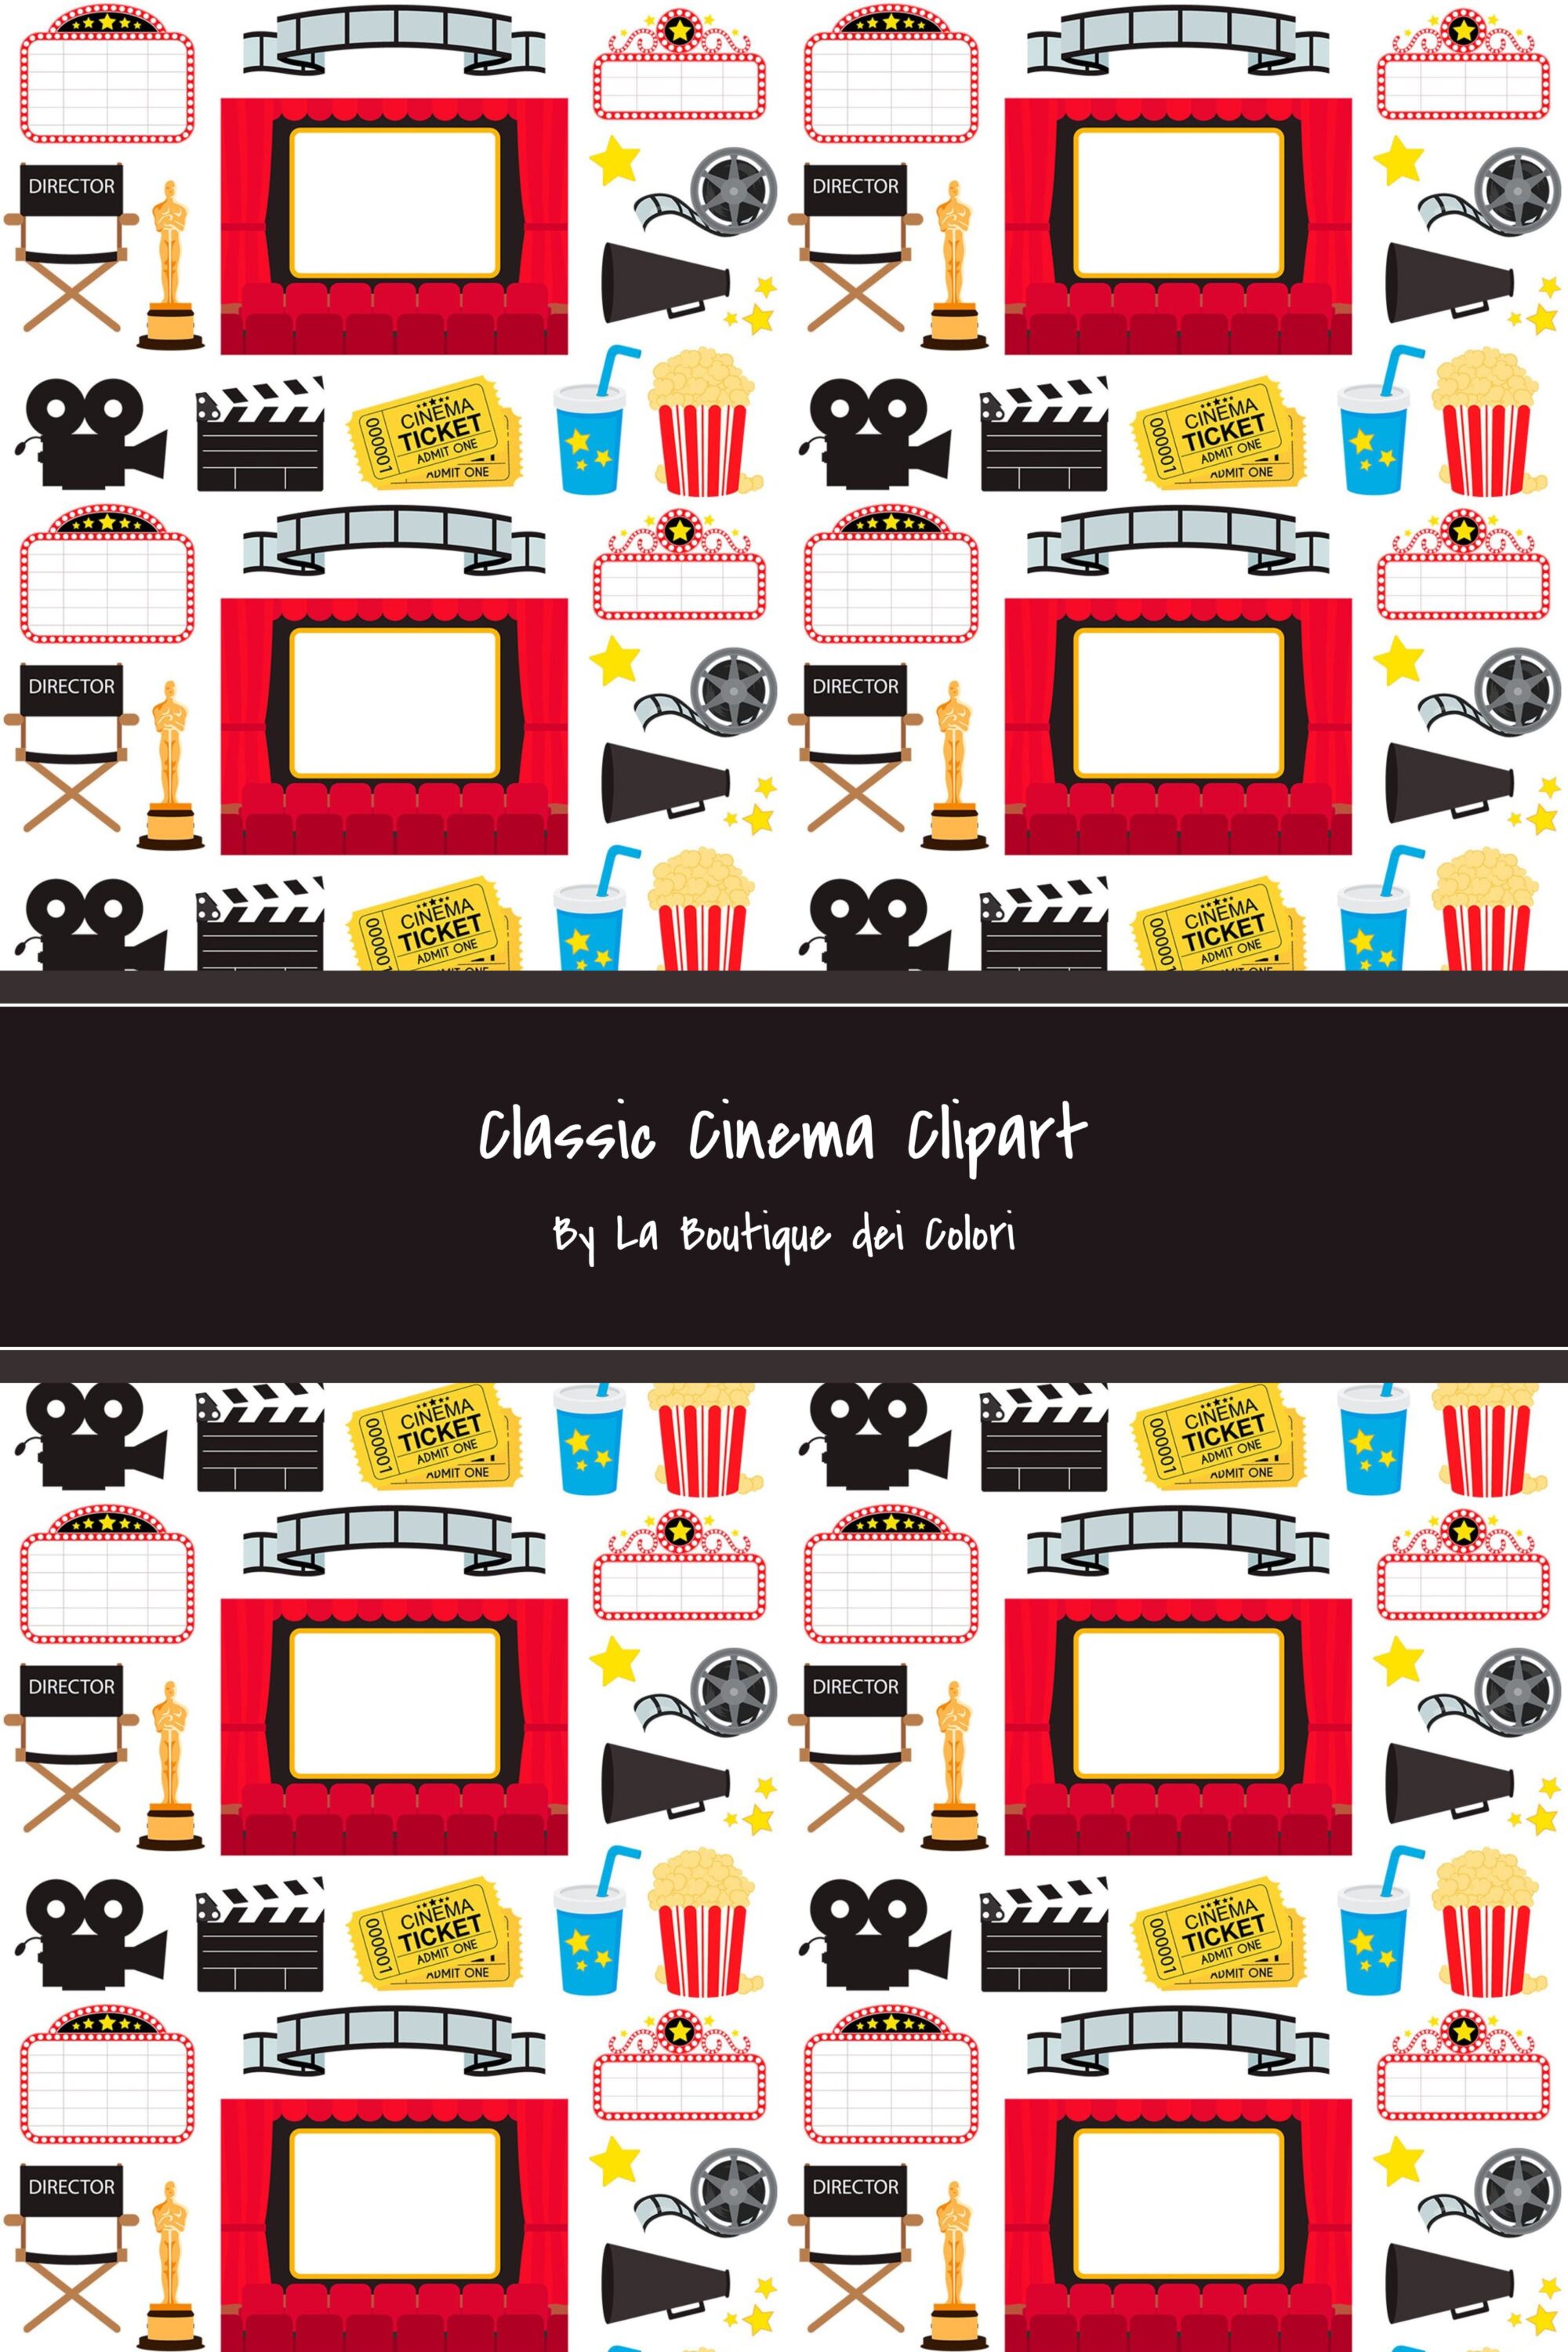 classic cinema clipart 03